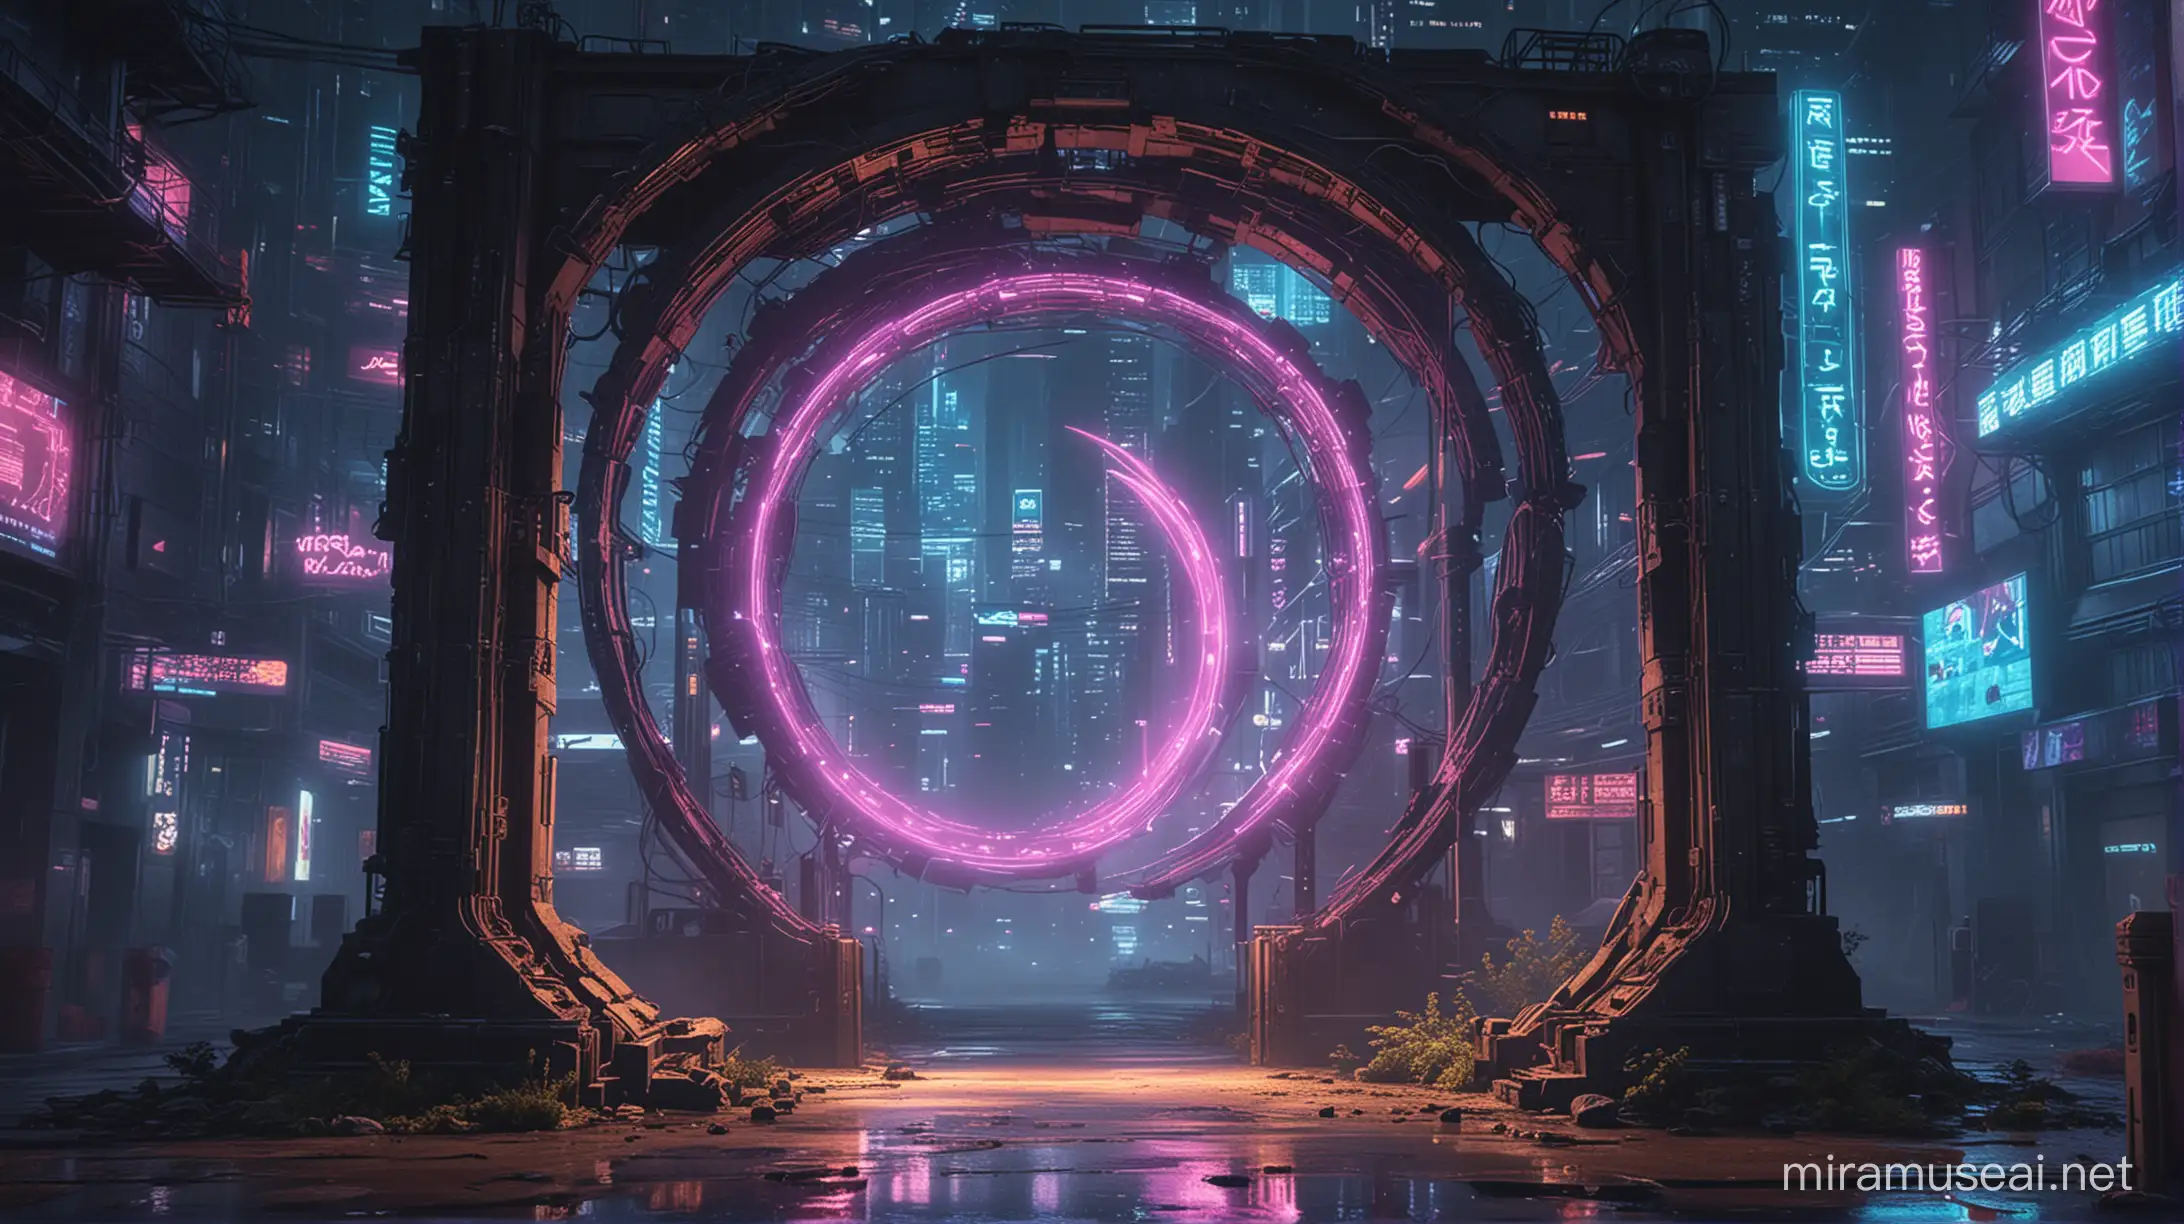 magical portal in a cyberpunk night city environment